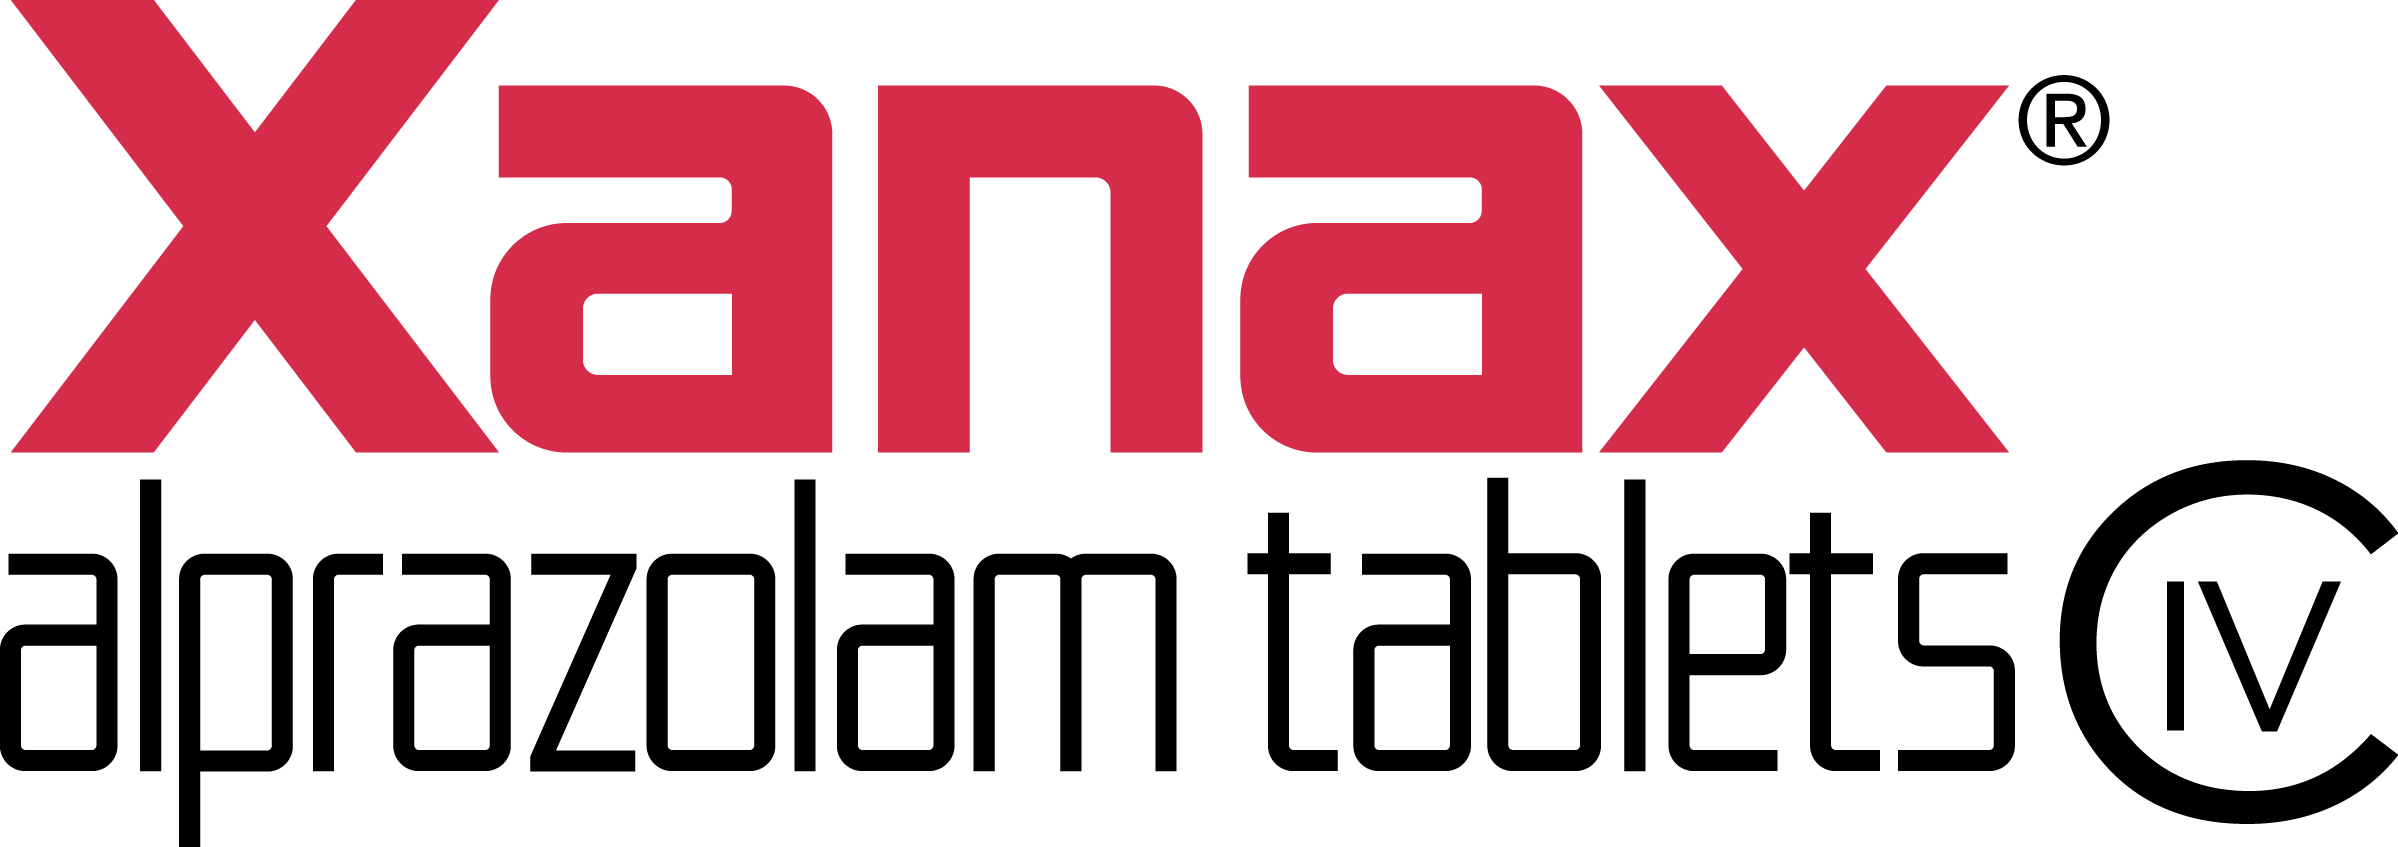 XANAX® alprazolam tablets CIV logo